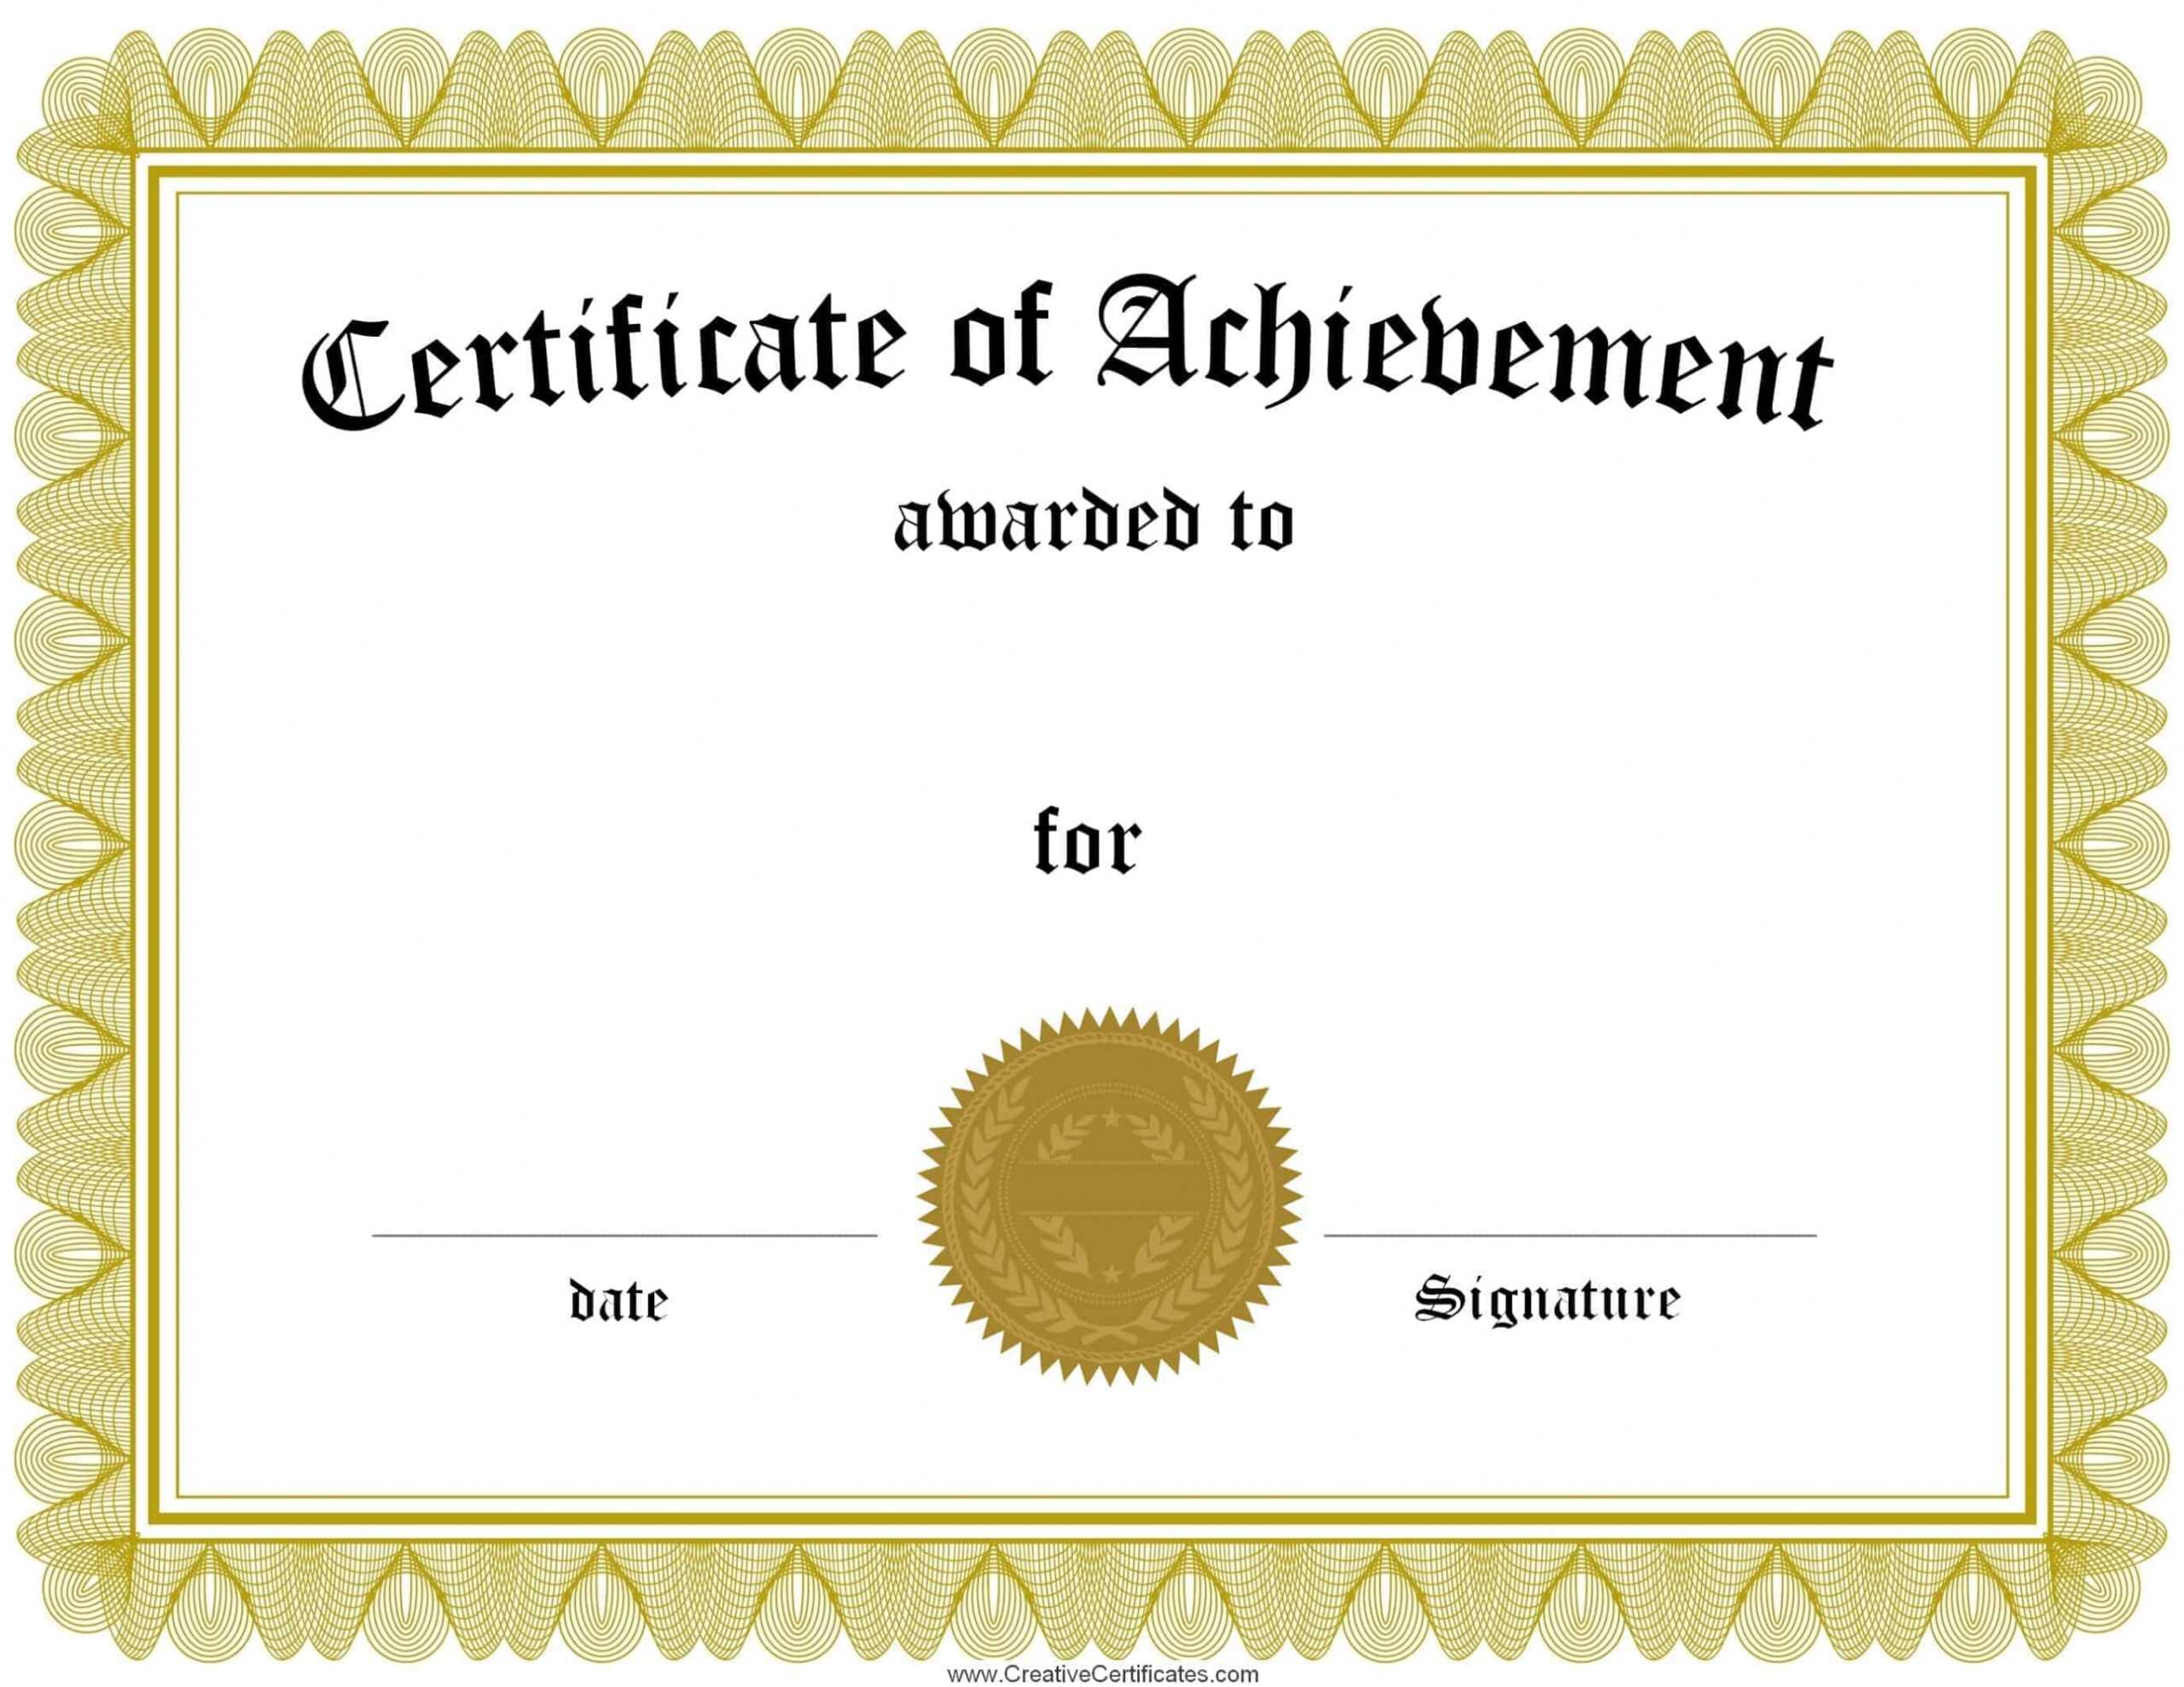 Free Customizable Certificate Of Achievement within Certificate Of Accomplishment Template Free